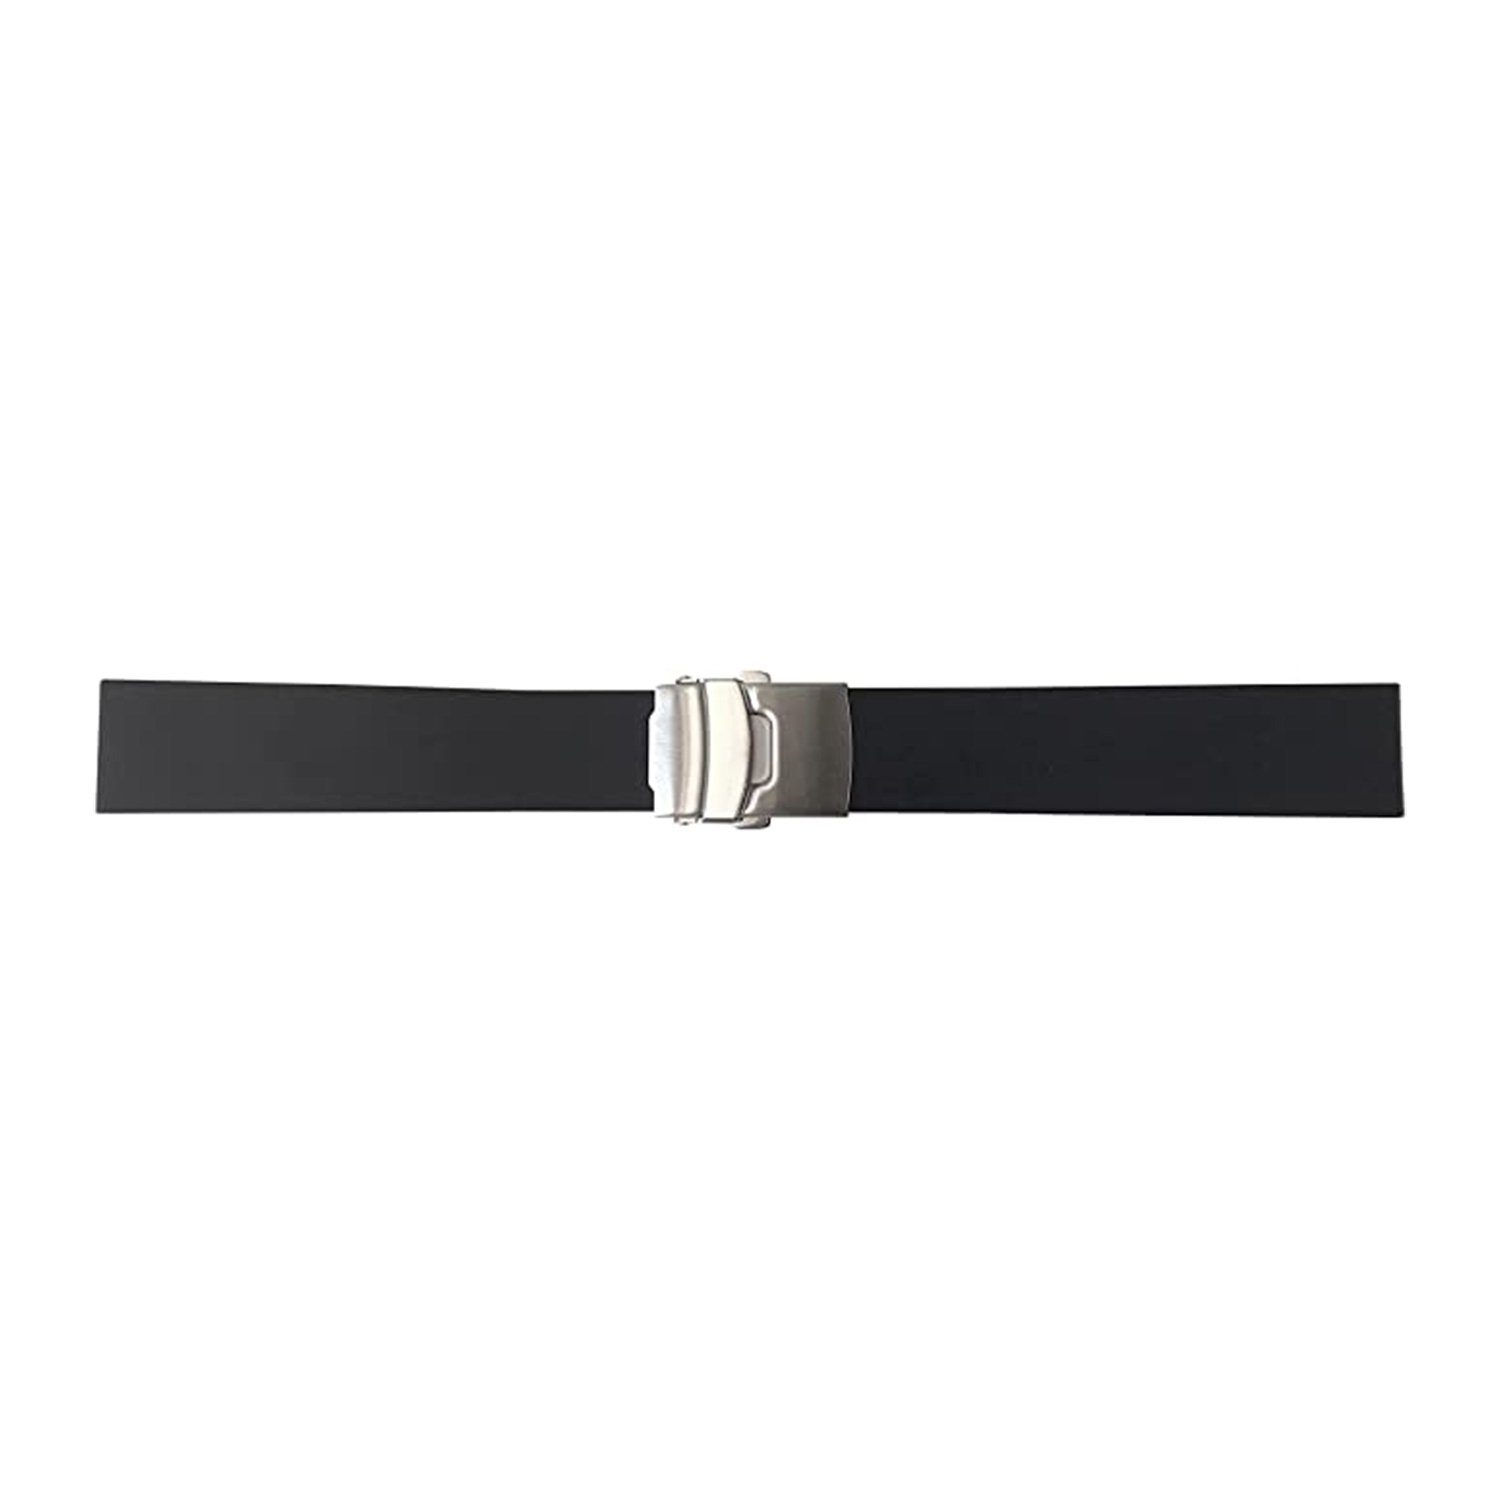 Selva Technik Uhrenarmband Kautschukband, Schwarz, mit Faltschließe, Uhrenarmband 20 mm schwarz